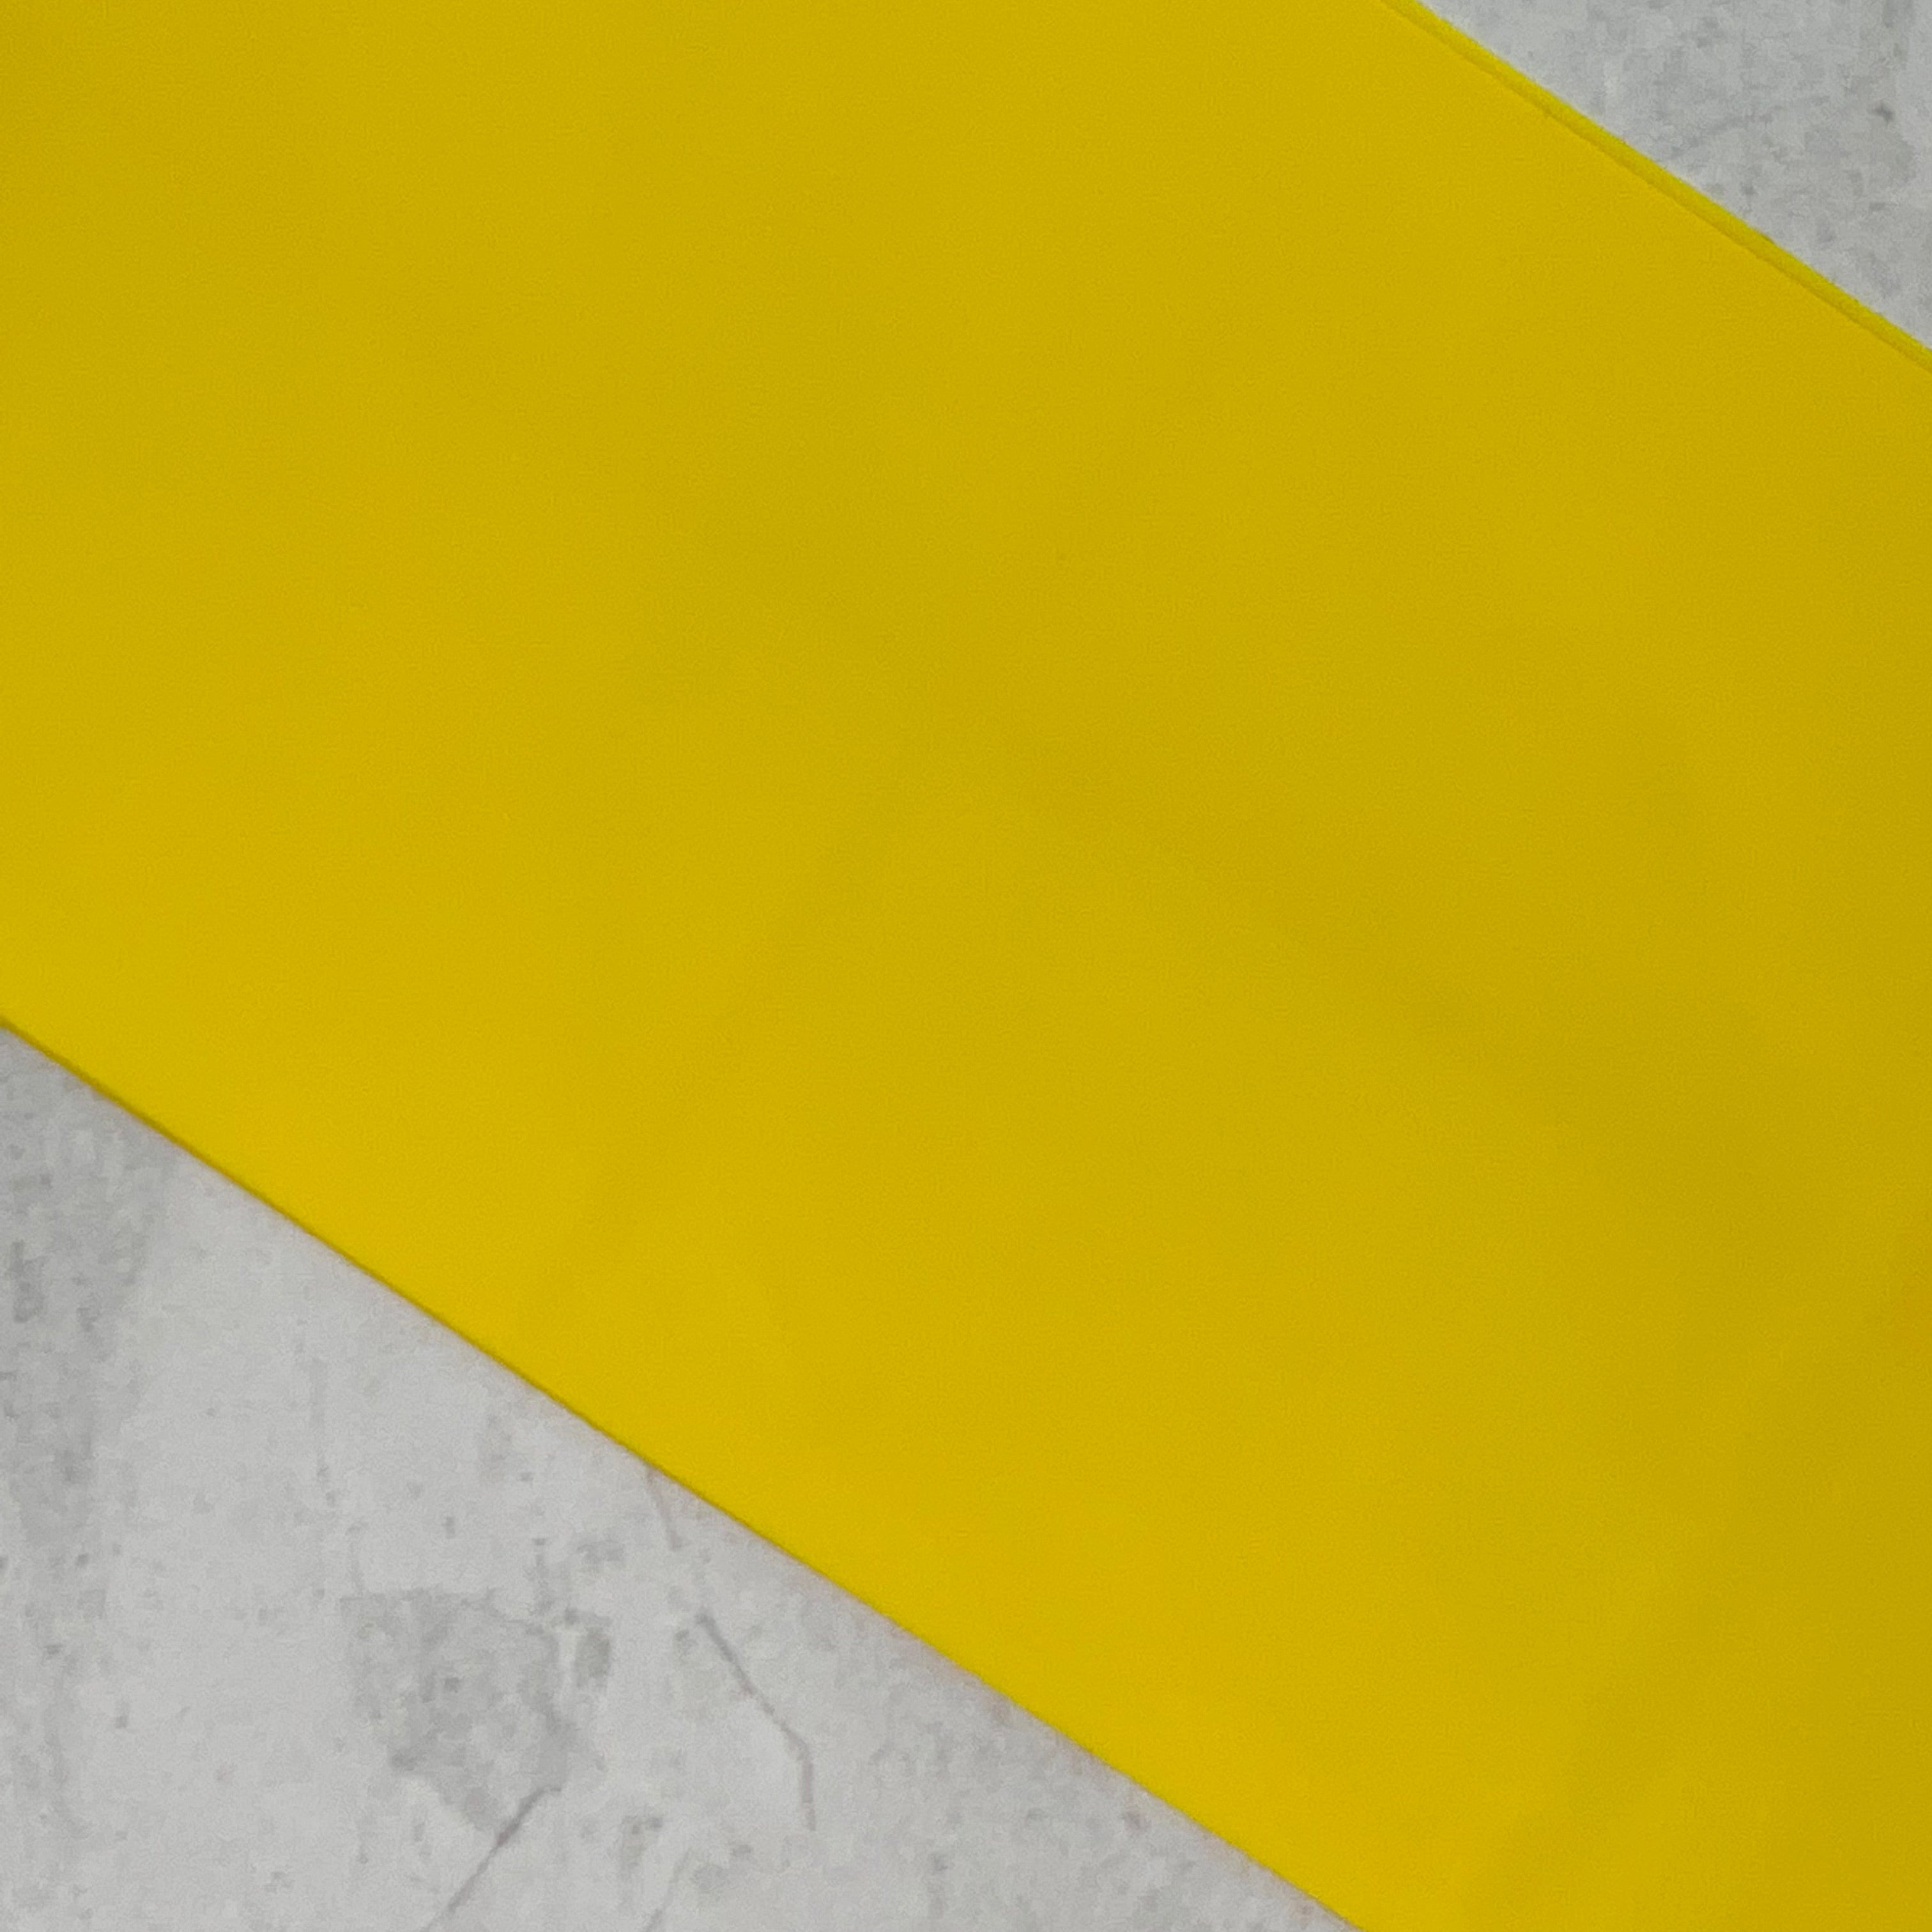     Yellow Latex Flat Band Closeup